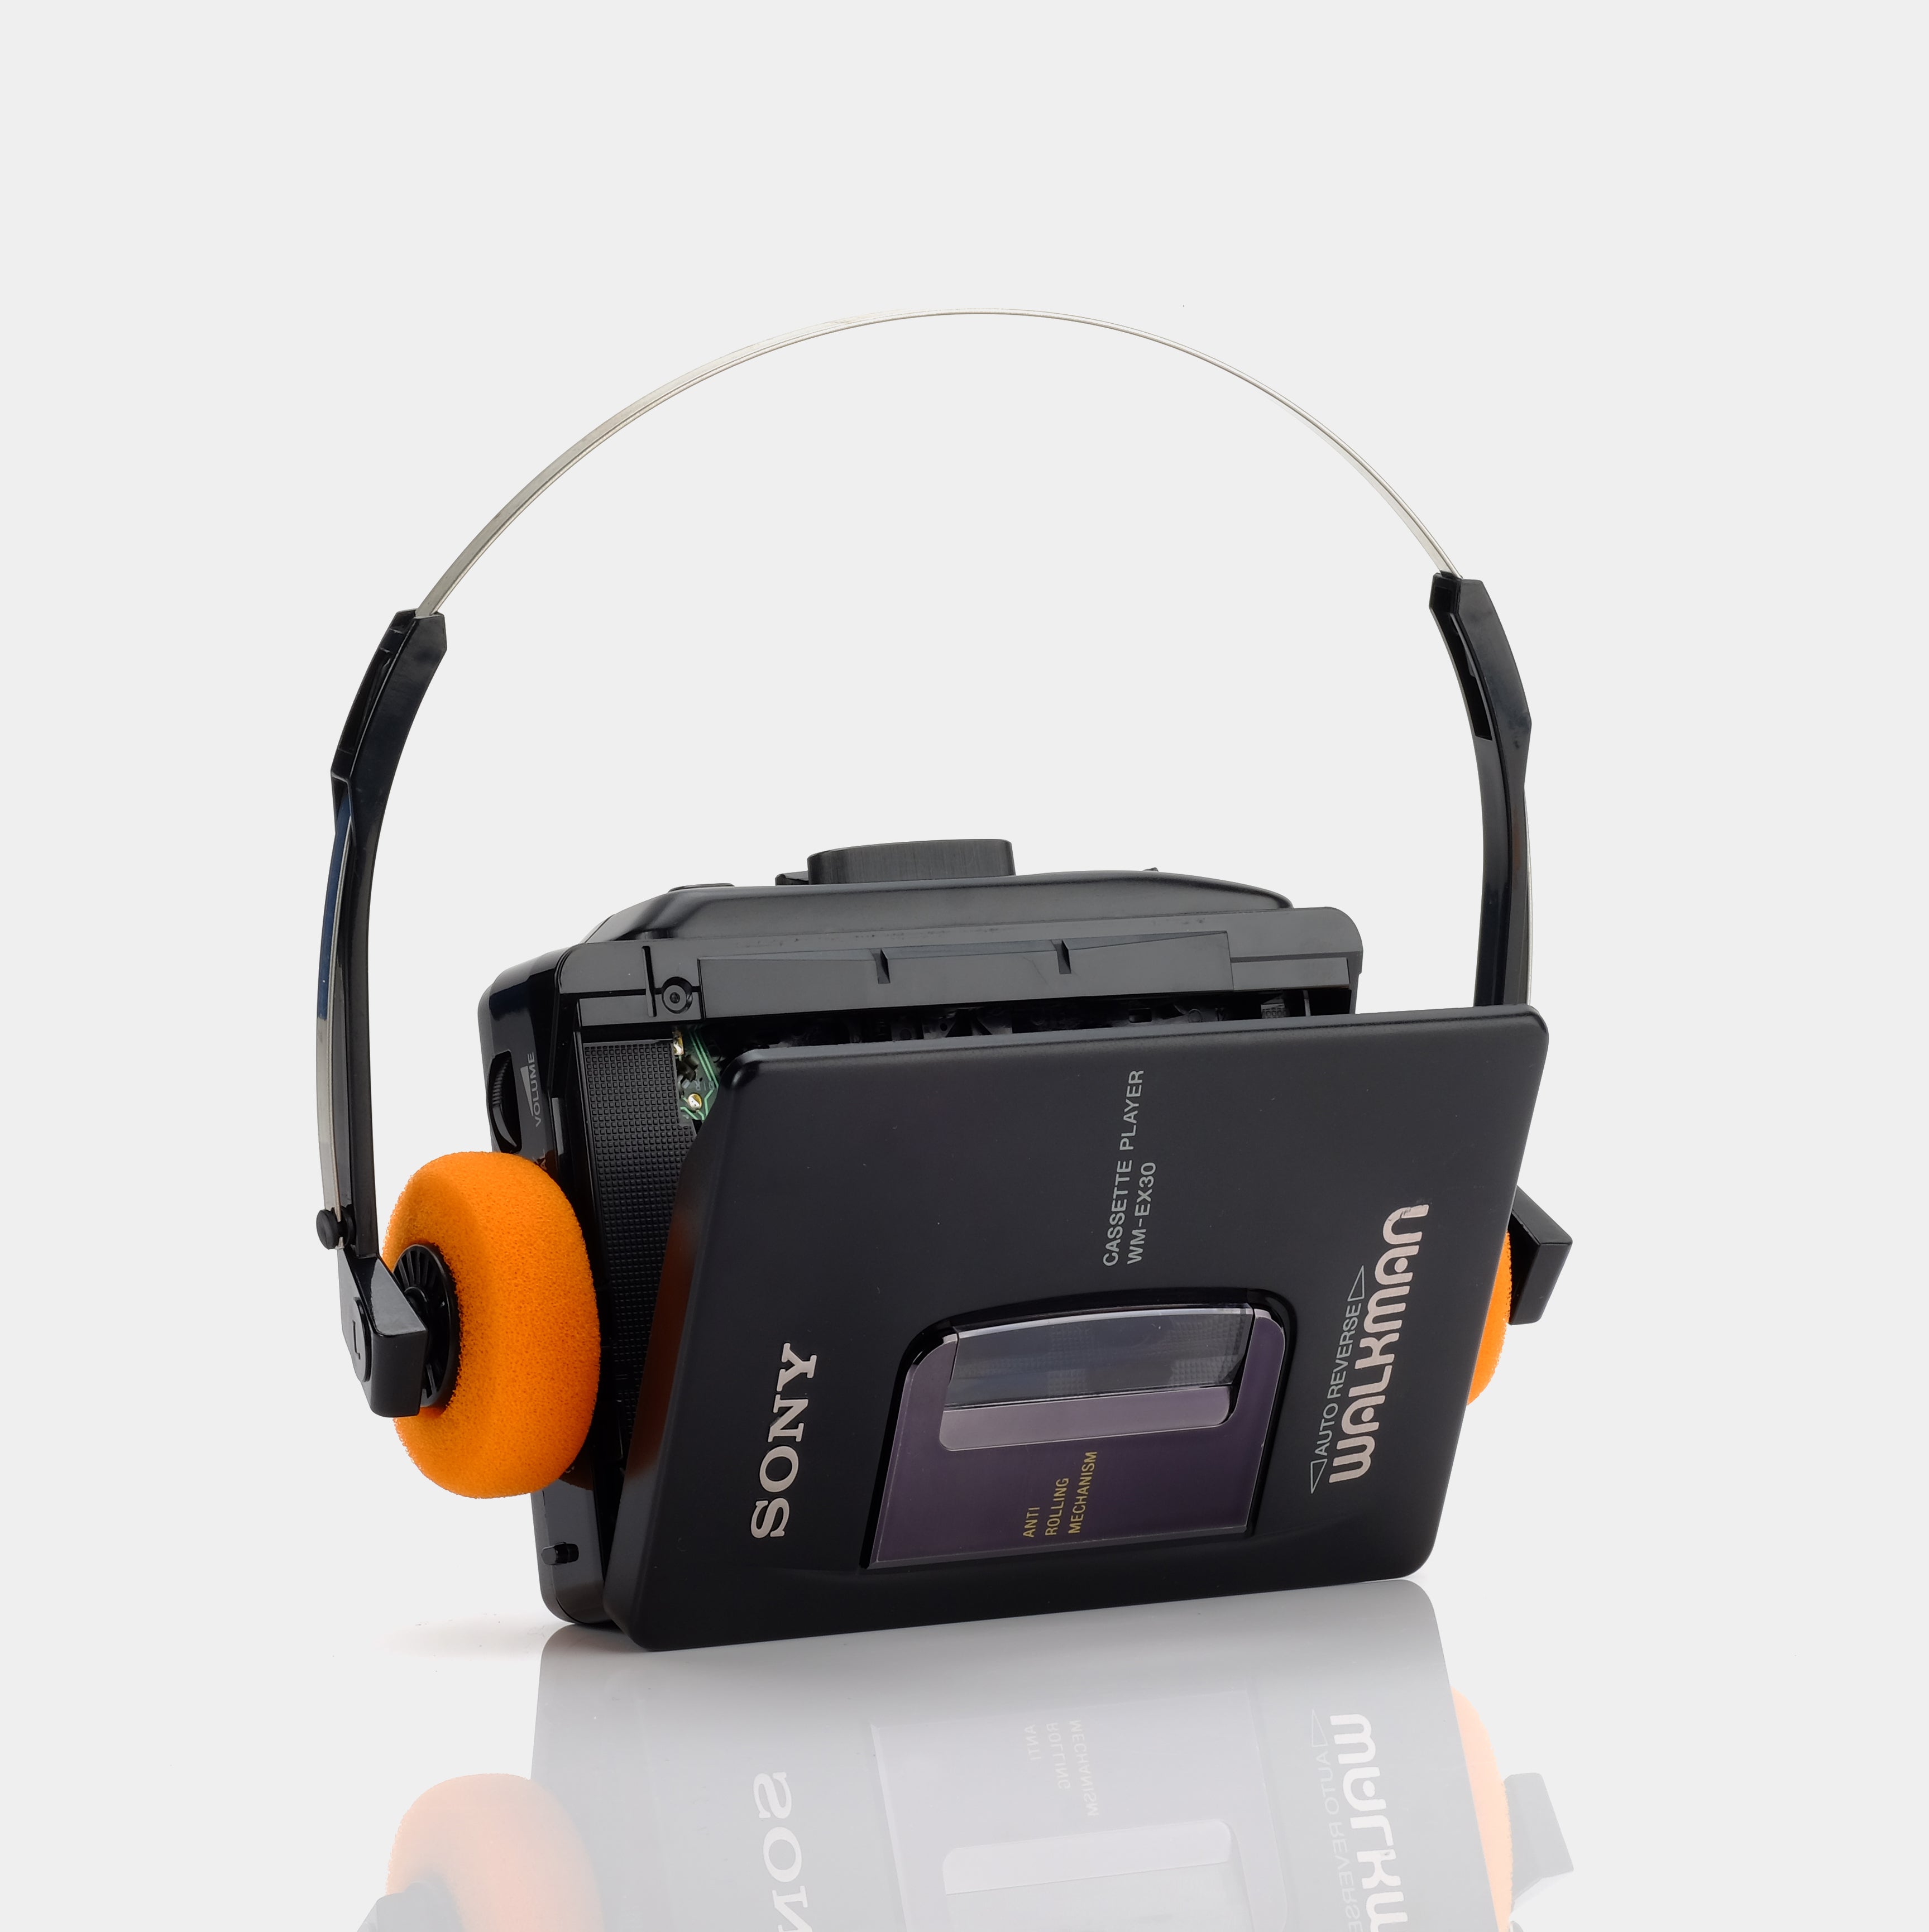 Sony Walkman WM-EX30 Portable Cassette Player